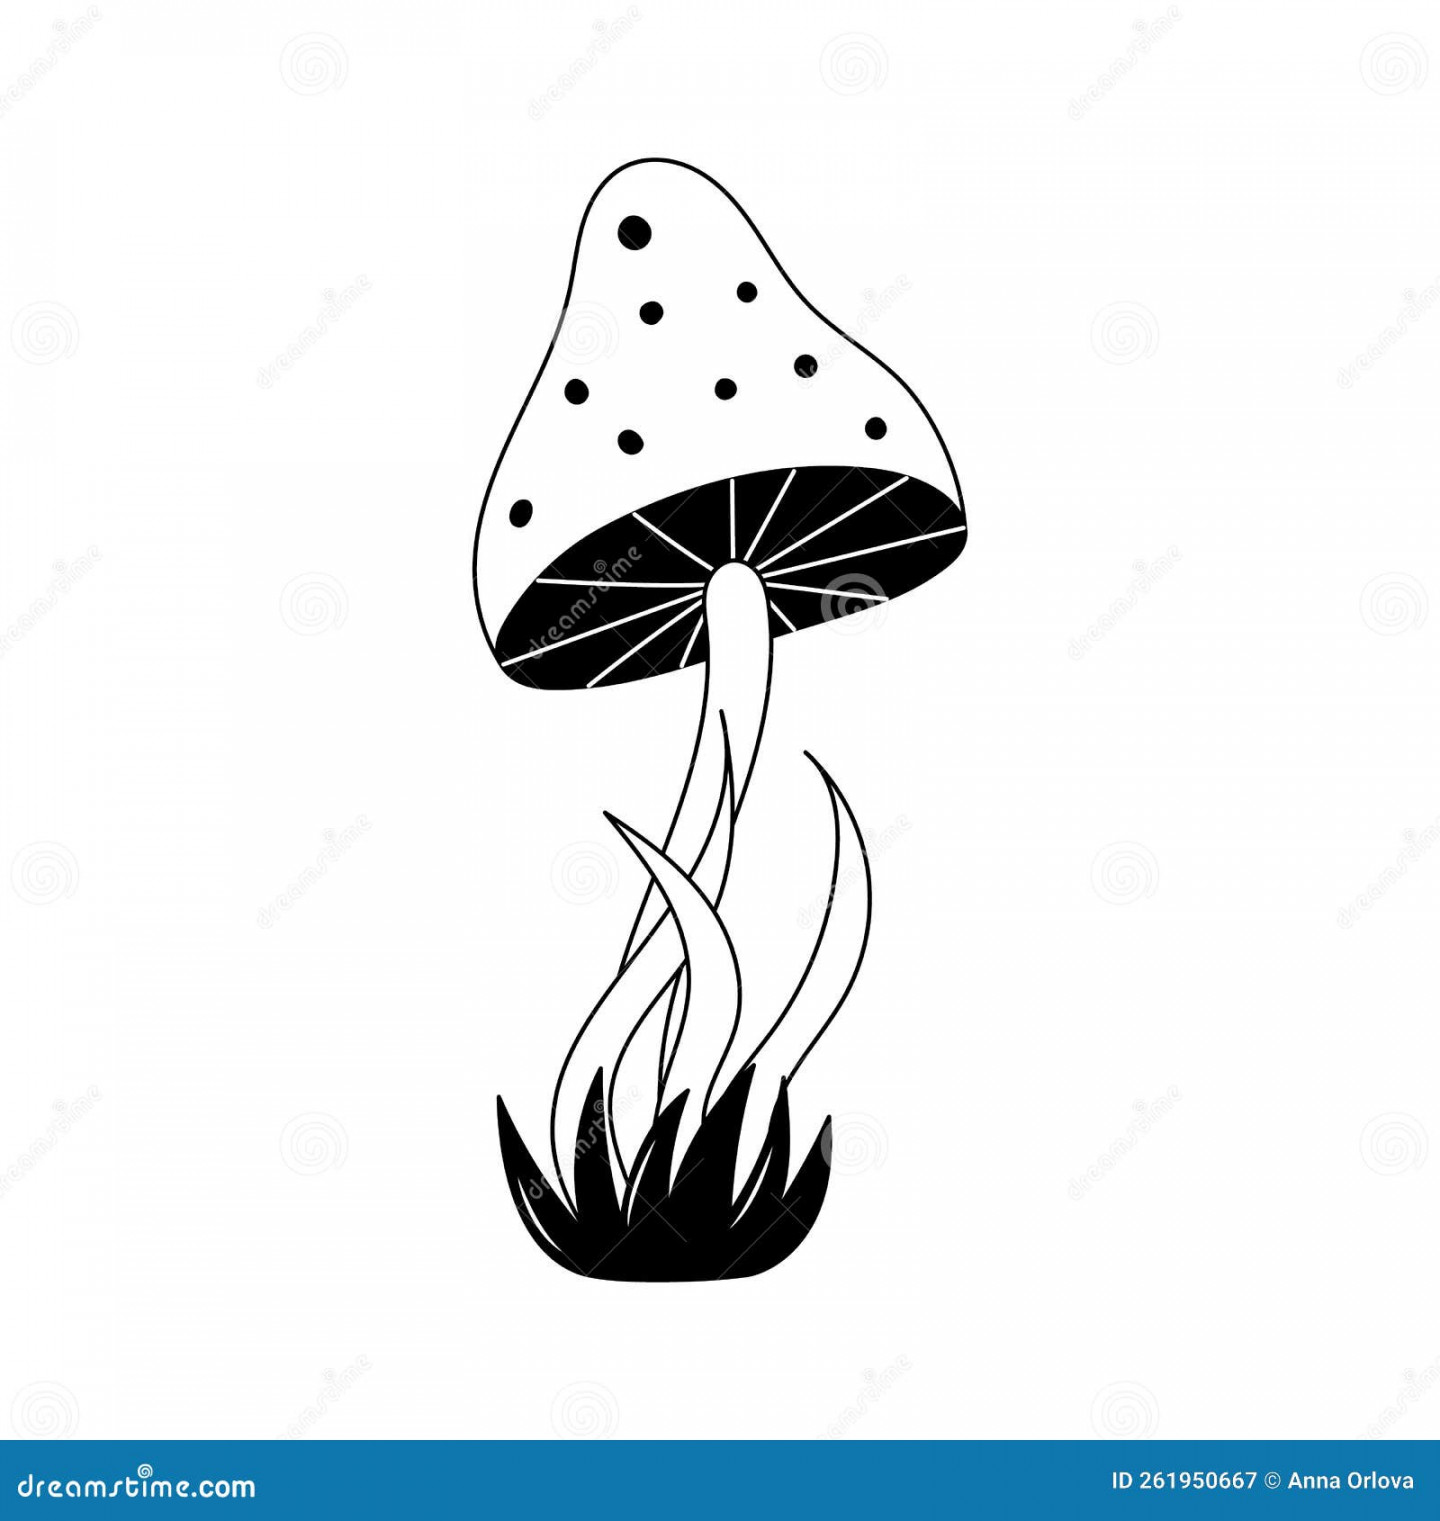 Mushroom Tattoo in Yk, s, 000s Style